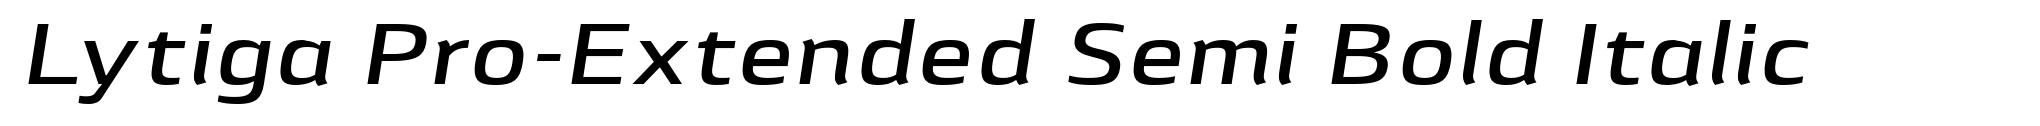 Lytiga Pro-Extended Semi Bold Italic image